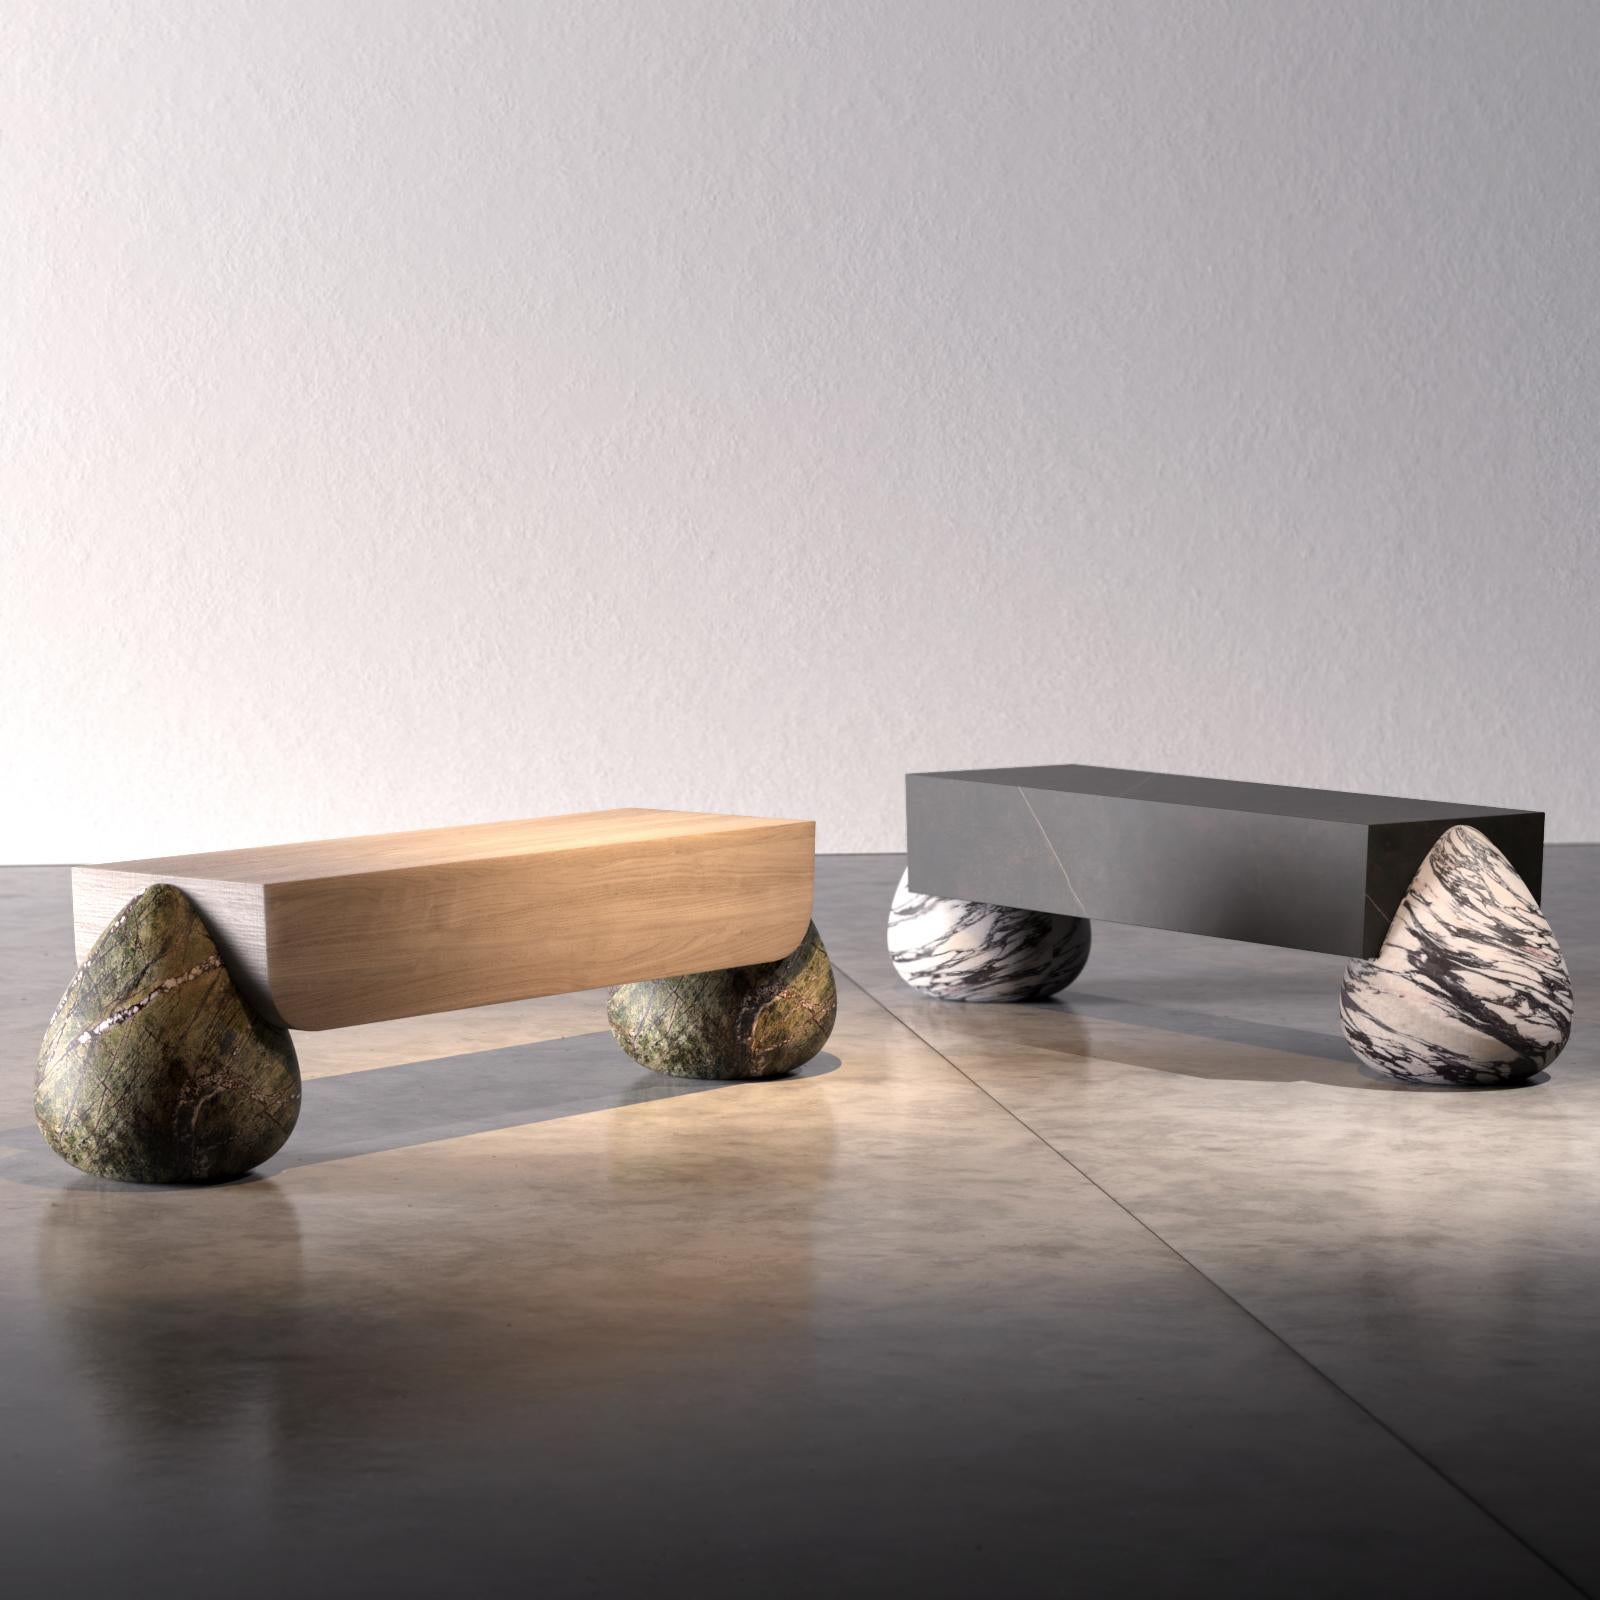 Set of 2 flint bench by Marmi Serafini
Dimensions: D 38 x W 156.6 x H 41 cm
Materials: marble, wood
Weight: 150 kg

